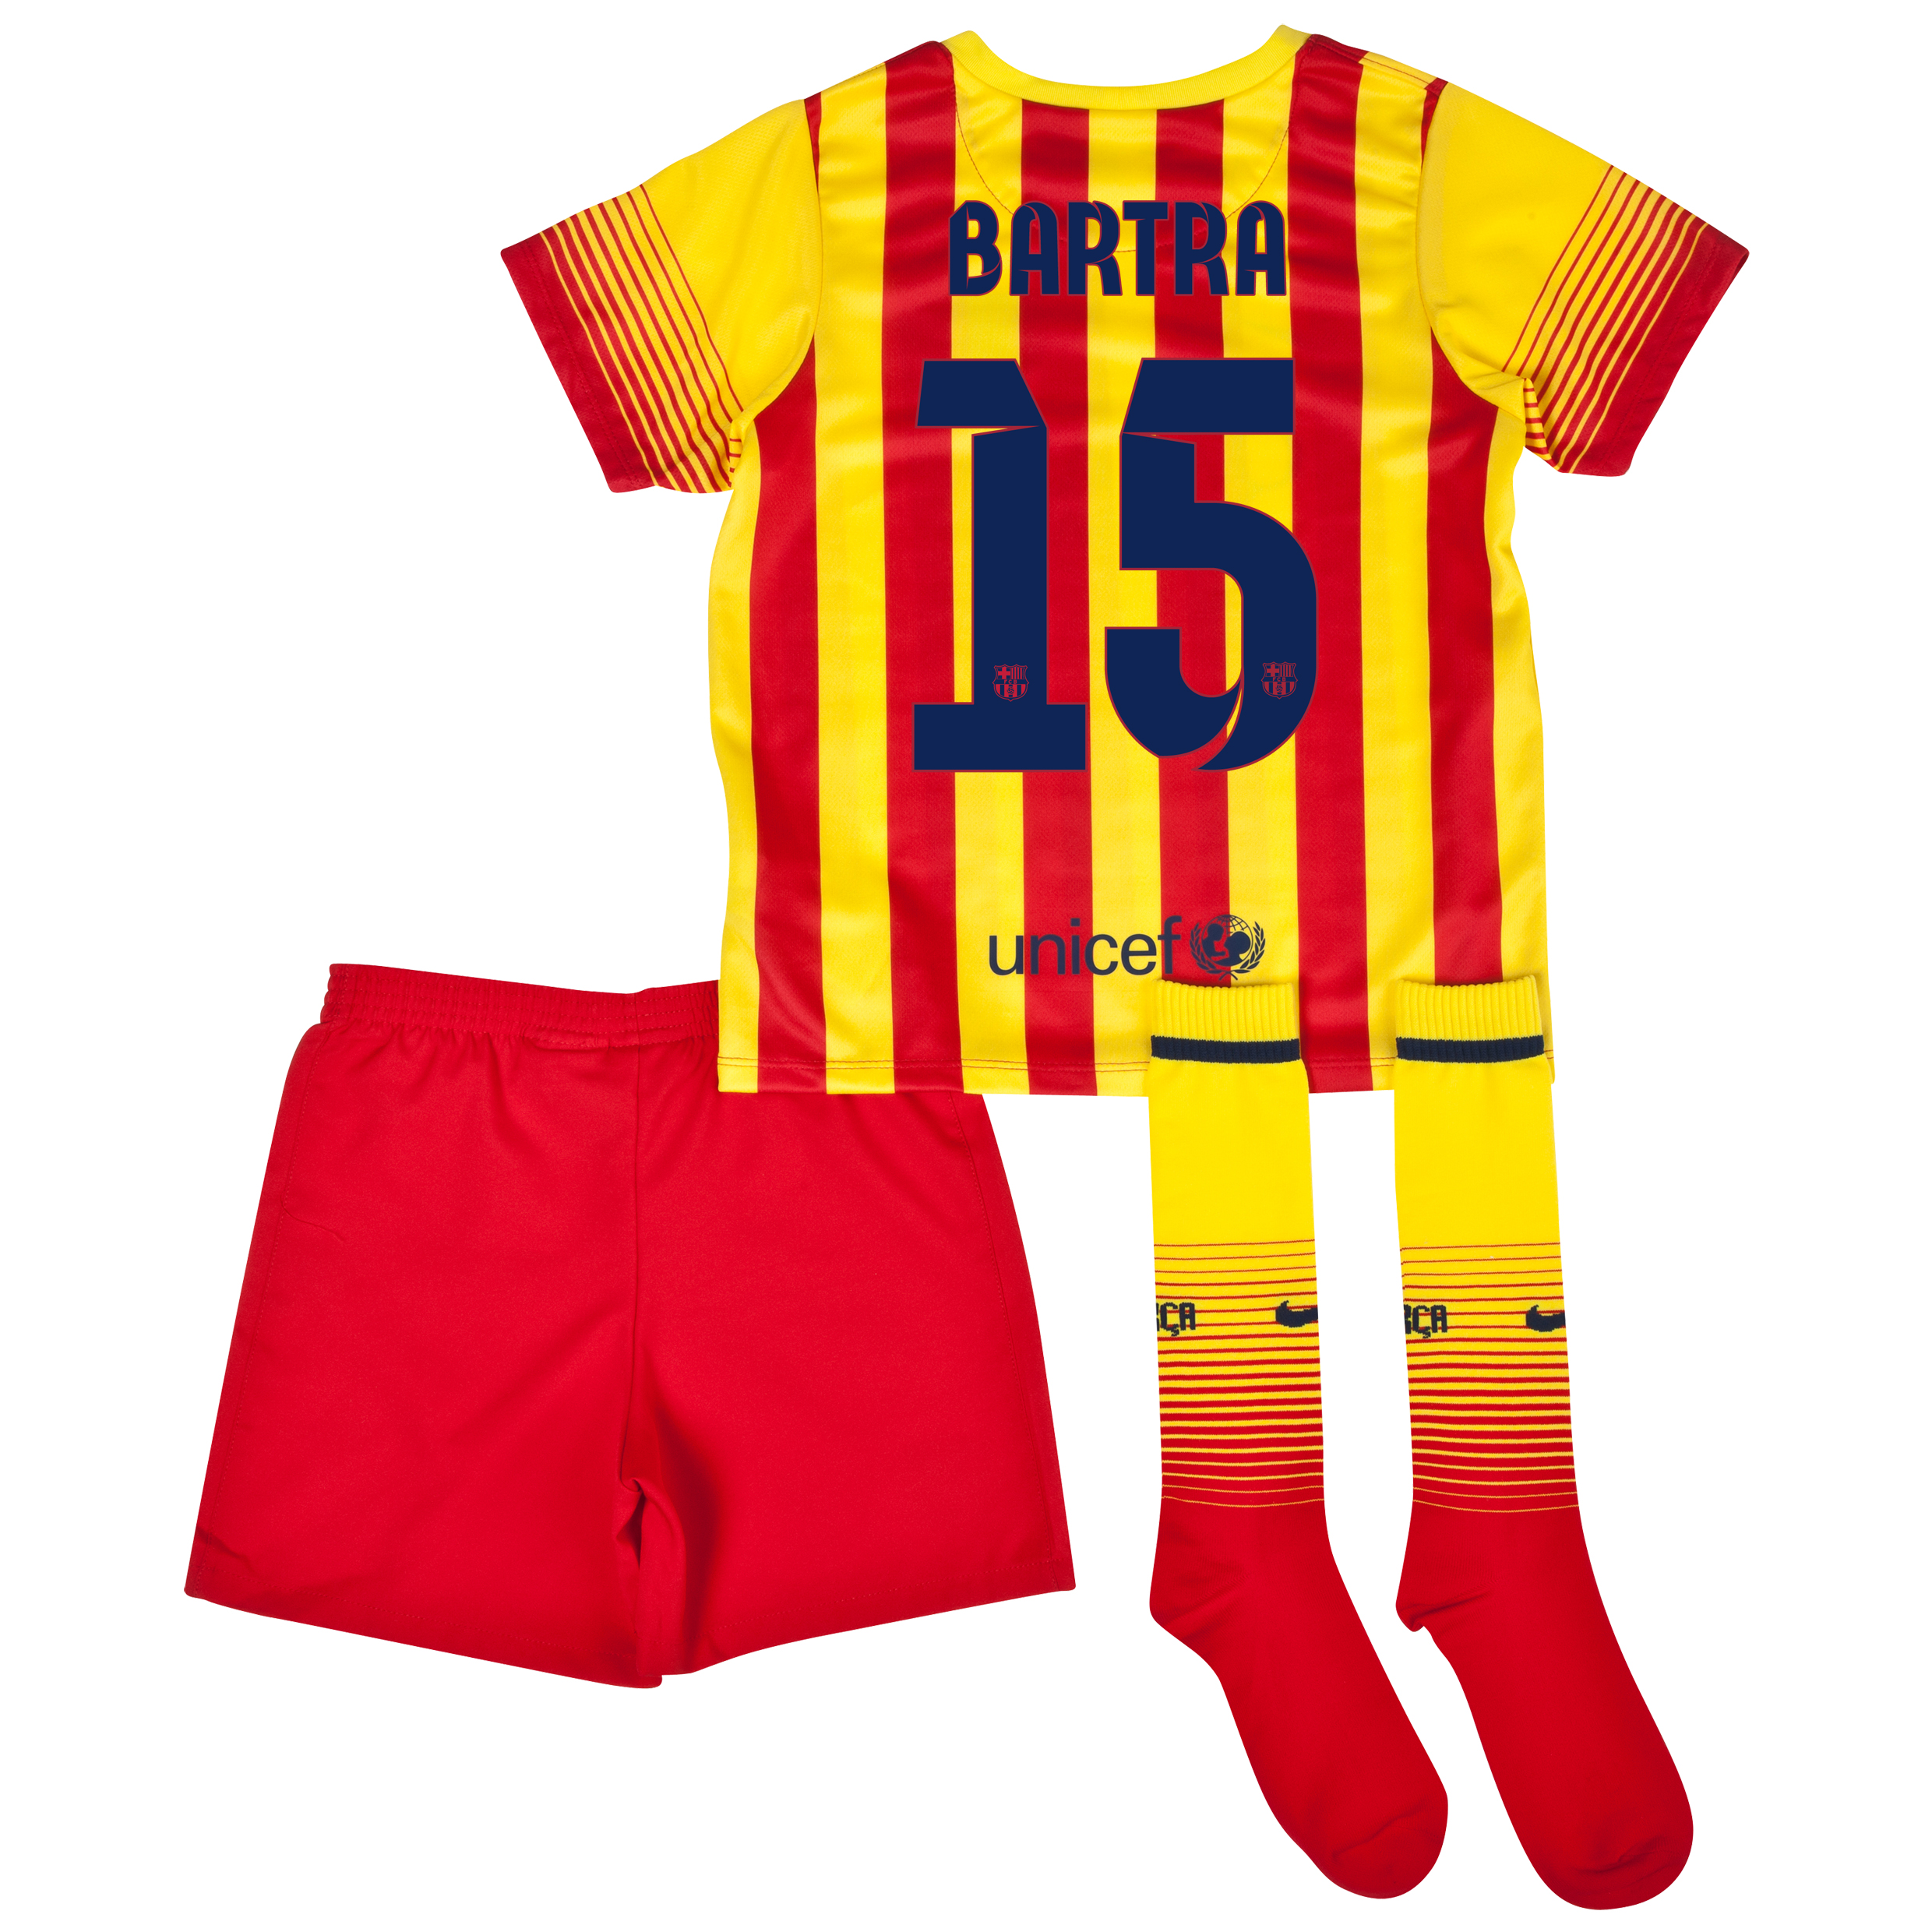 Barcelona Away Kit 2013/14 - Little Boys with Bartra 15 printing